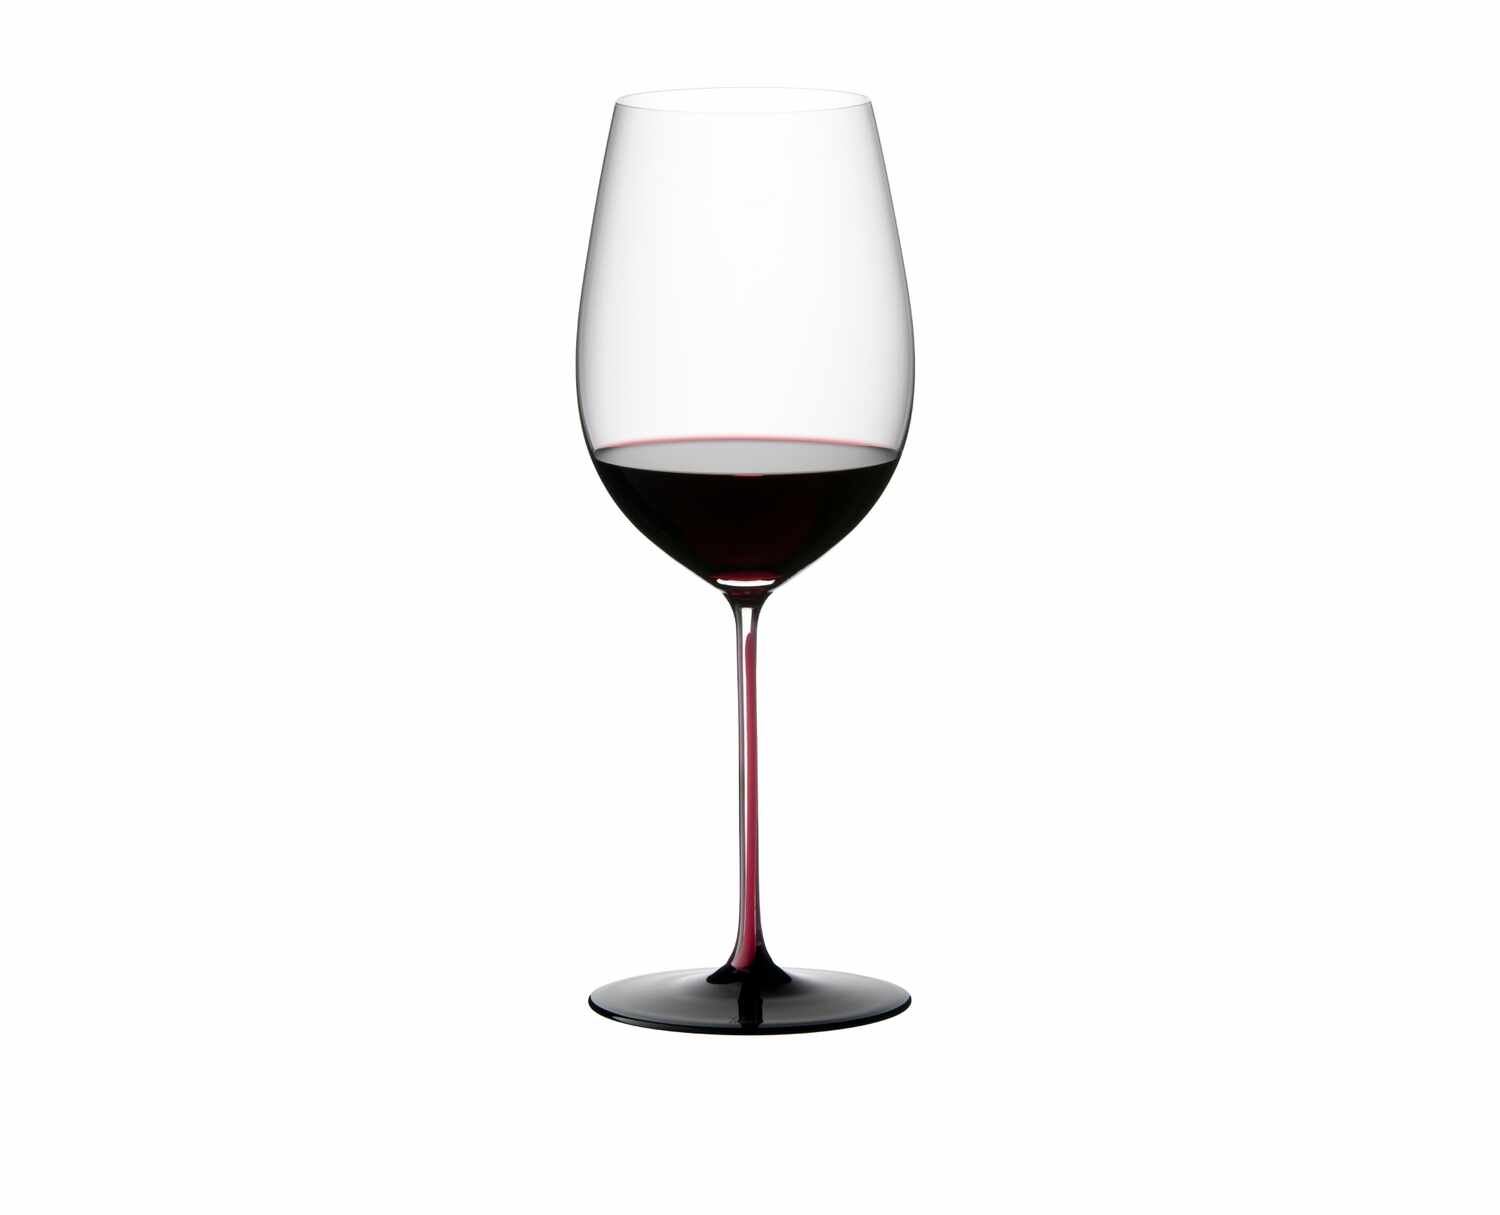  Pahar pentru vin, din cristal Black Series Bordeaux Grand Cru Burgundy / Negru, 860 ml, Riedel la pret 441 lei 